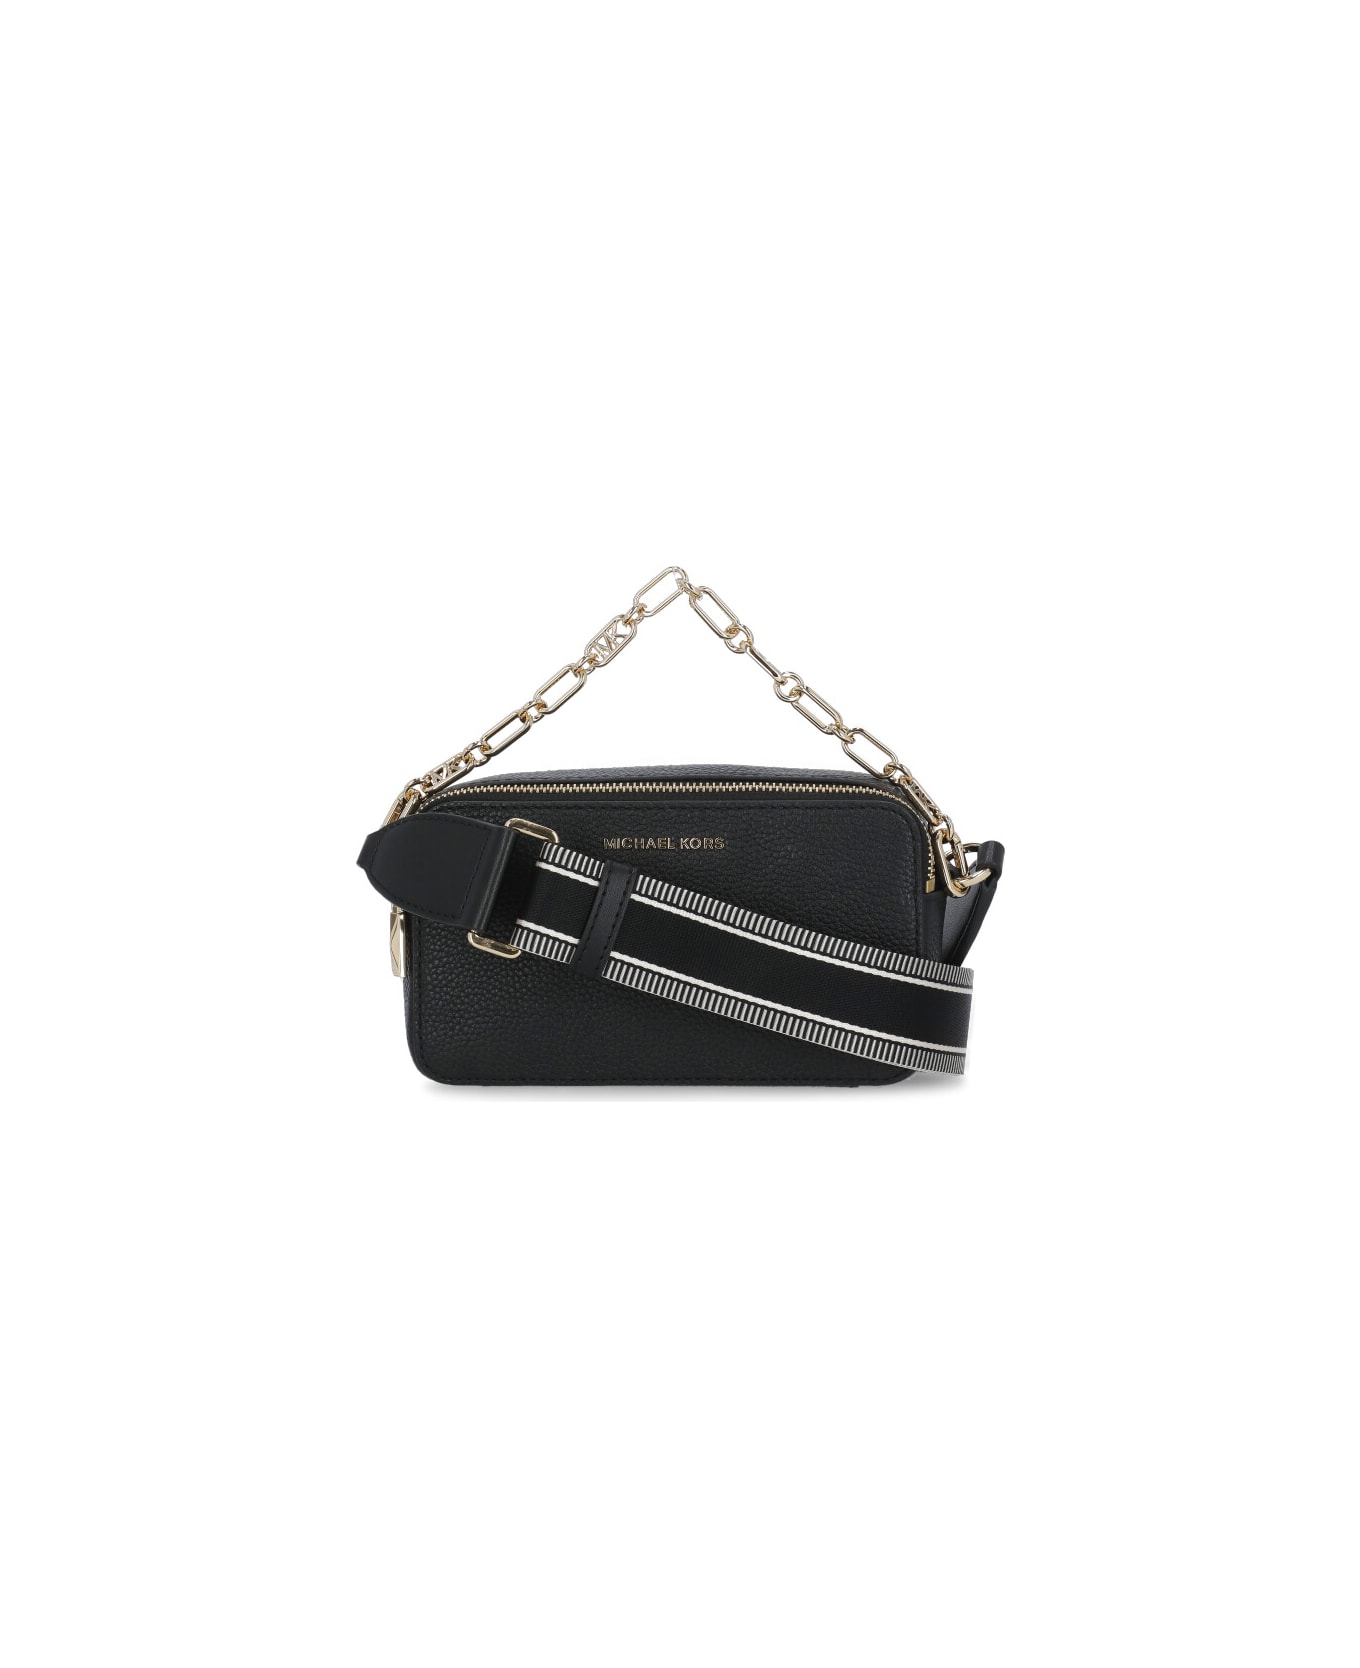 Michael Kors Handbag - Black